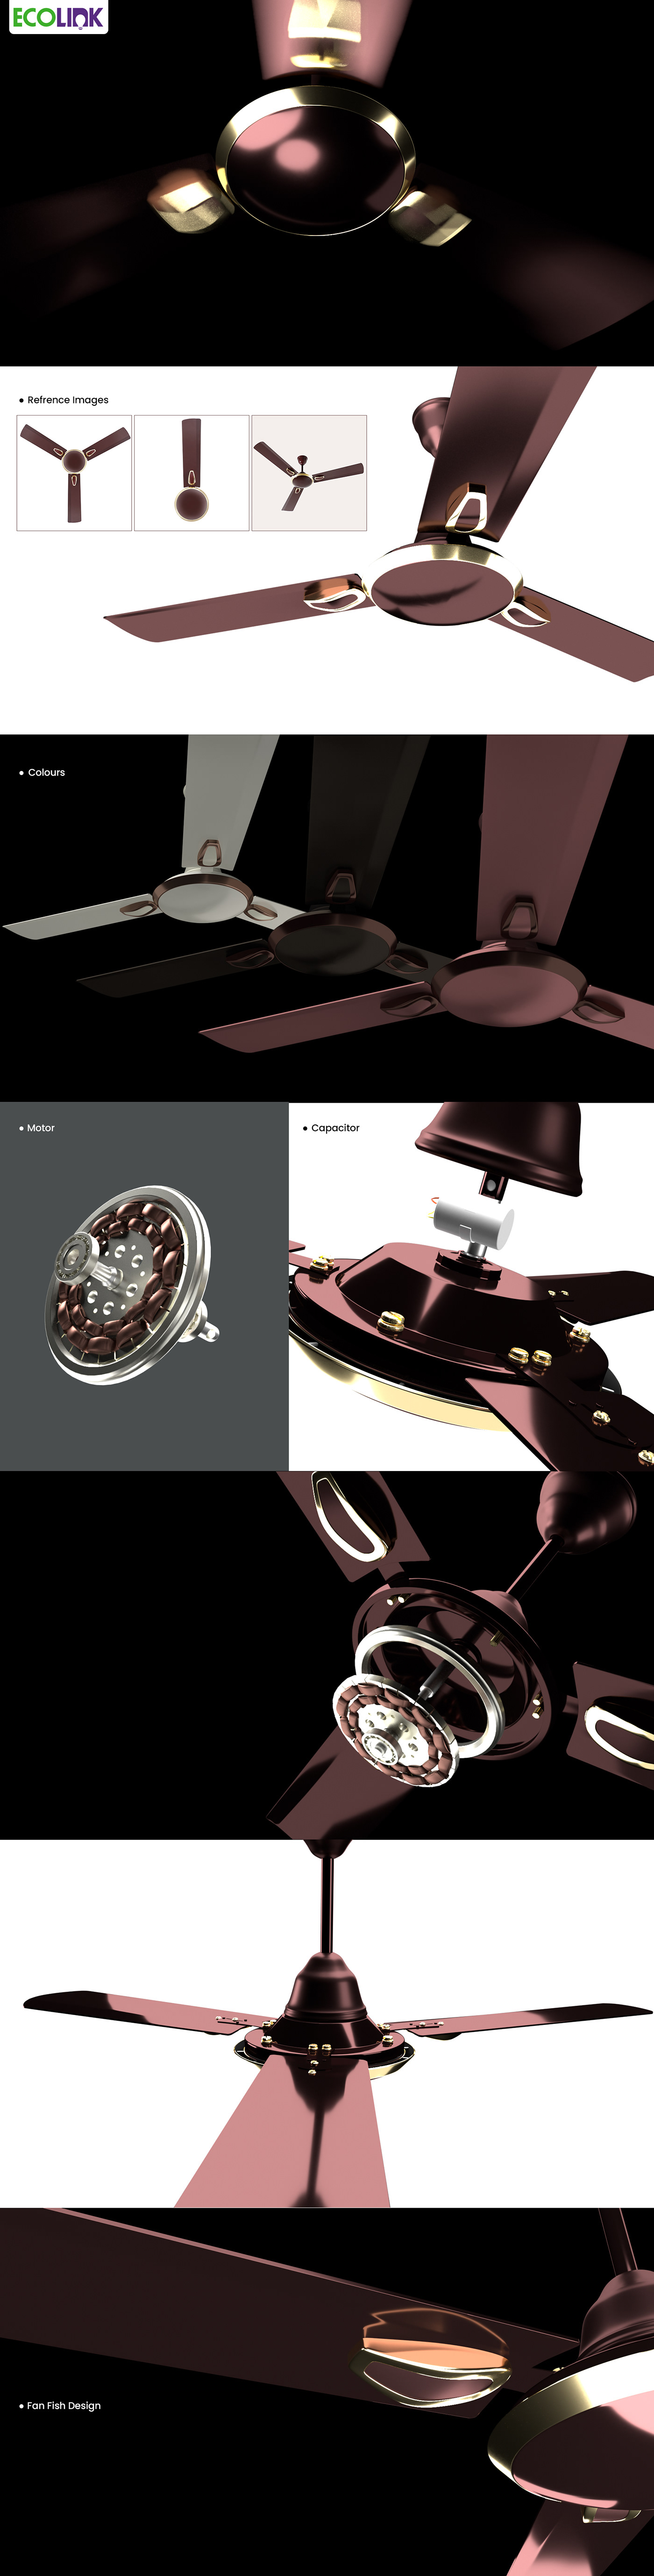 3d animation 3d modeling 3dsmax architecture cinema 4d corona jitanshu kumar saini motion graphics  Philips vrayrender